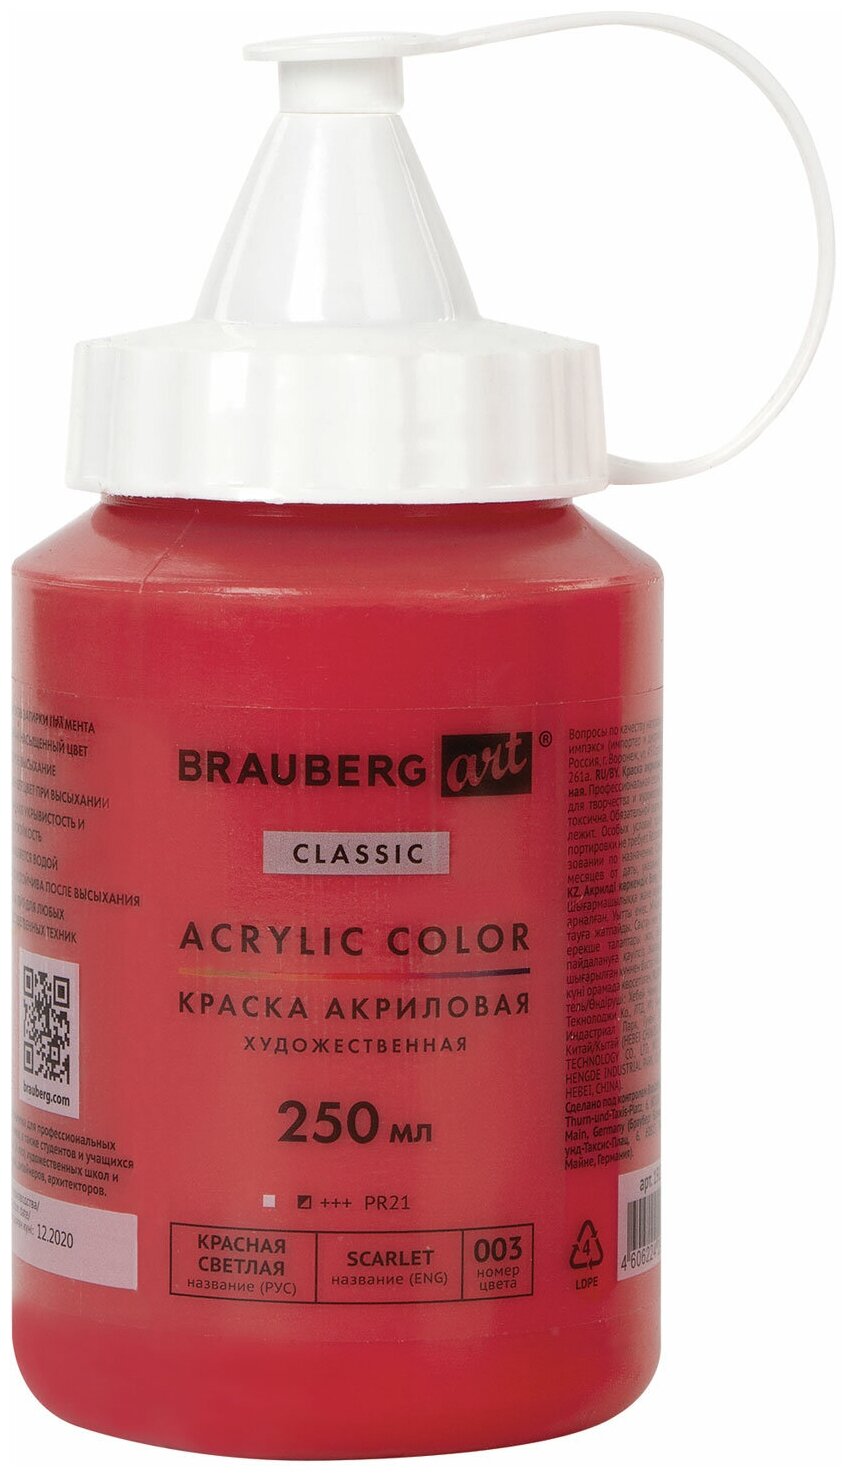 Краска акриловая художественная BRAUBERG ART CLASSIC, флакон 250 мл, красная светлая, 191707